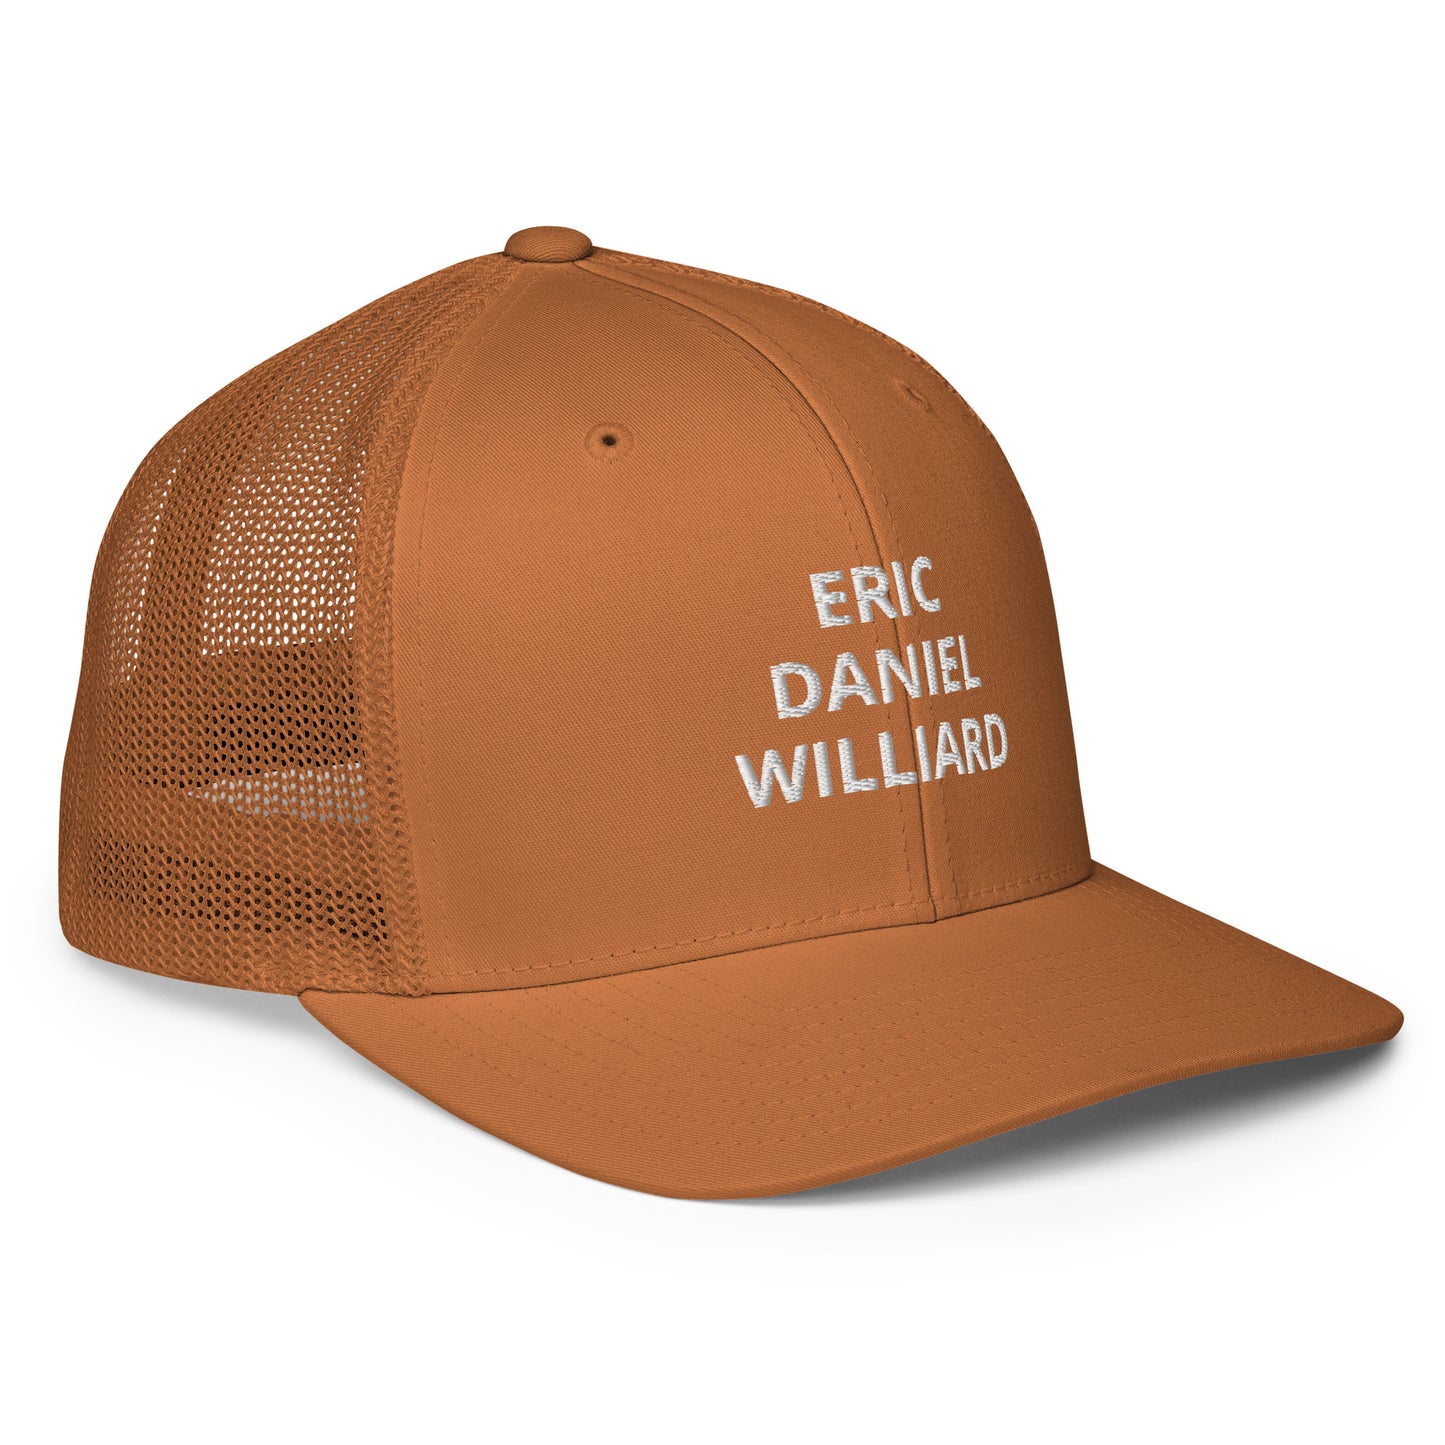 EDW Mesh back trucker cap